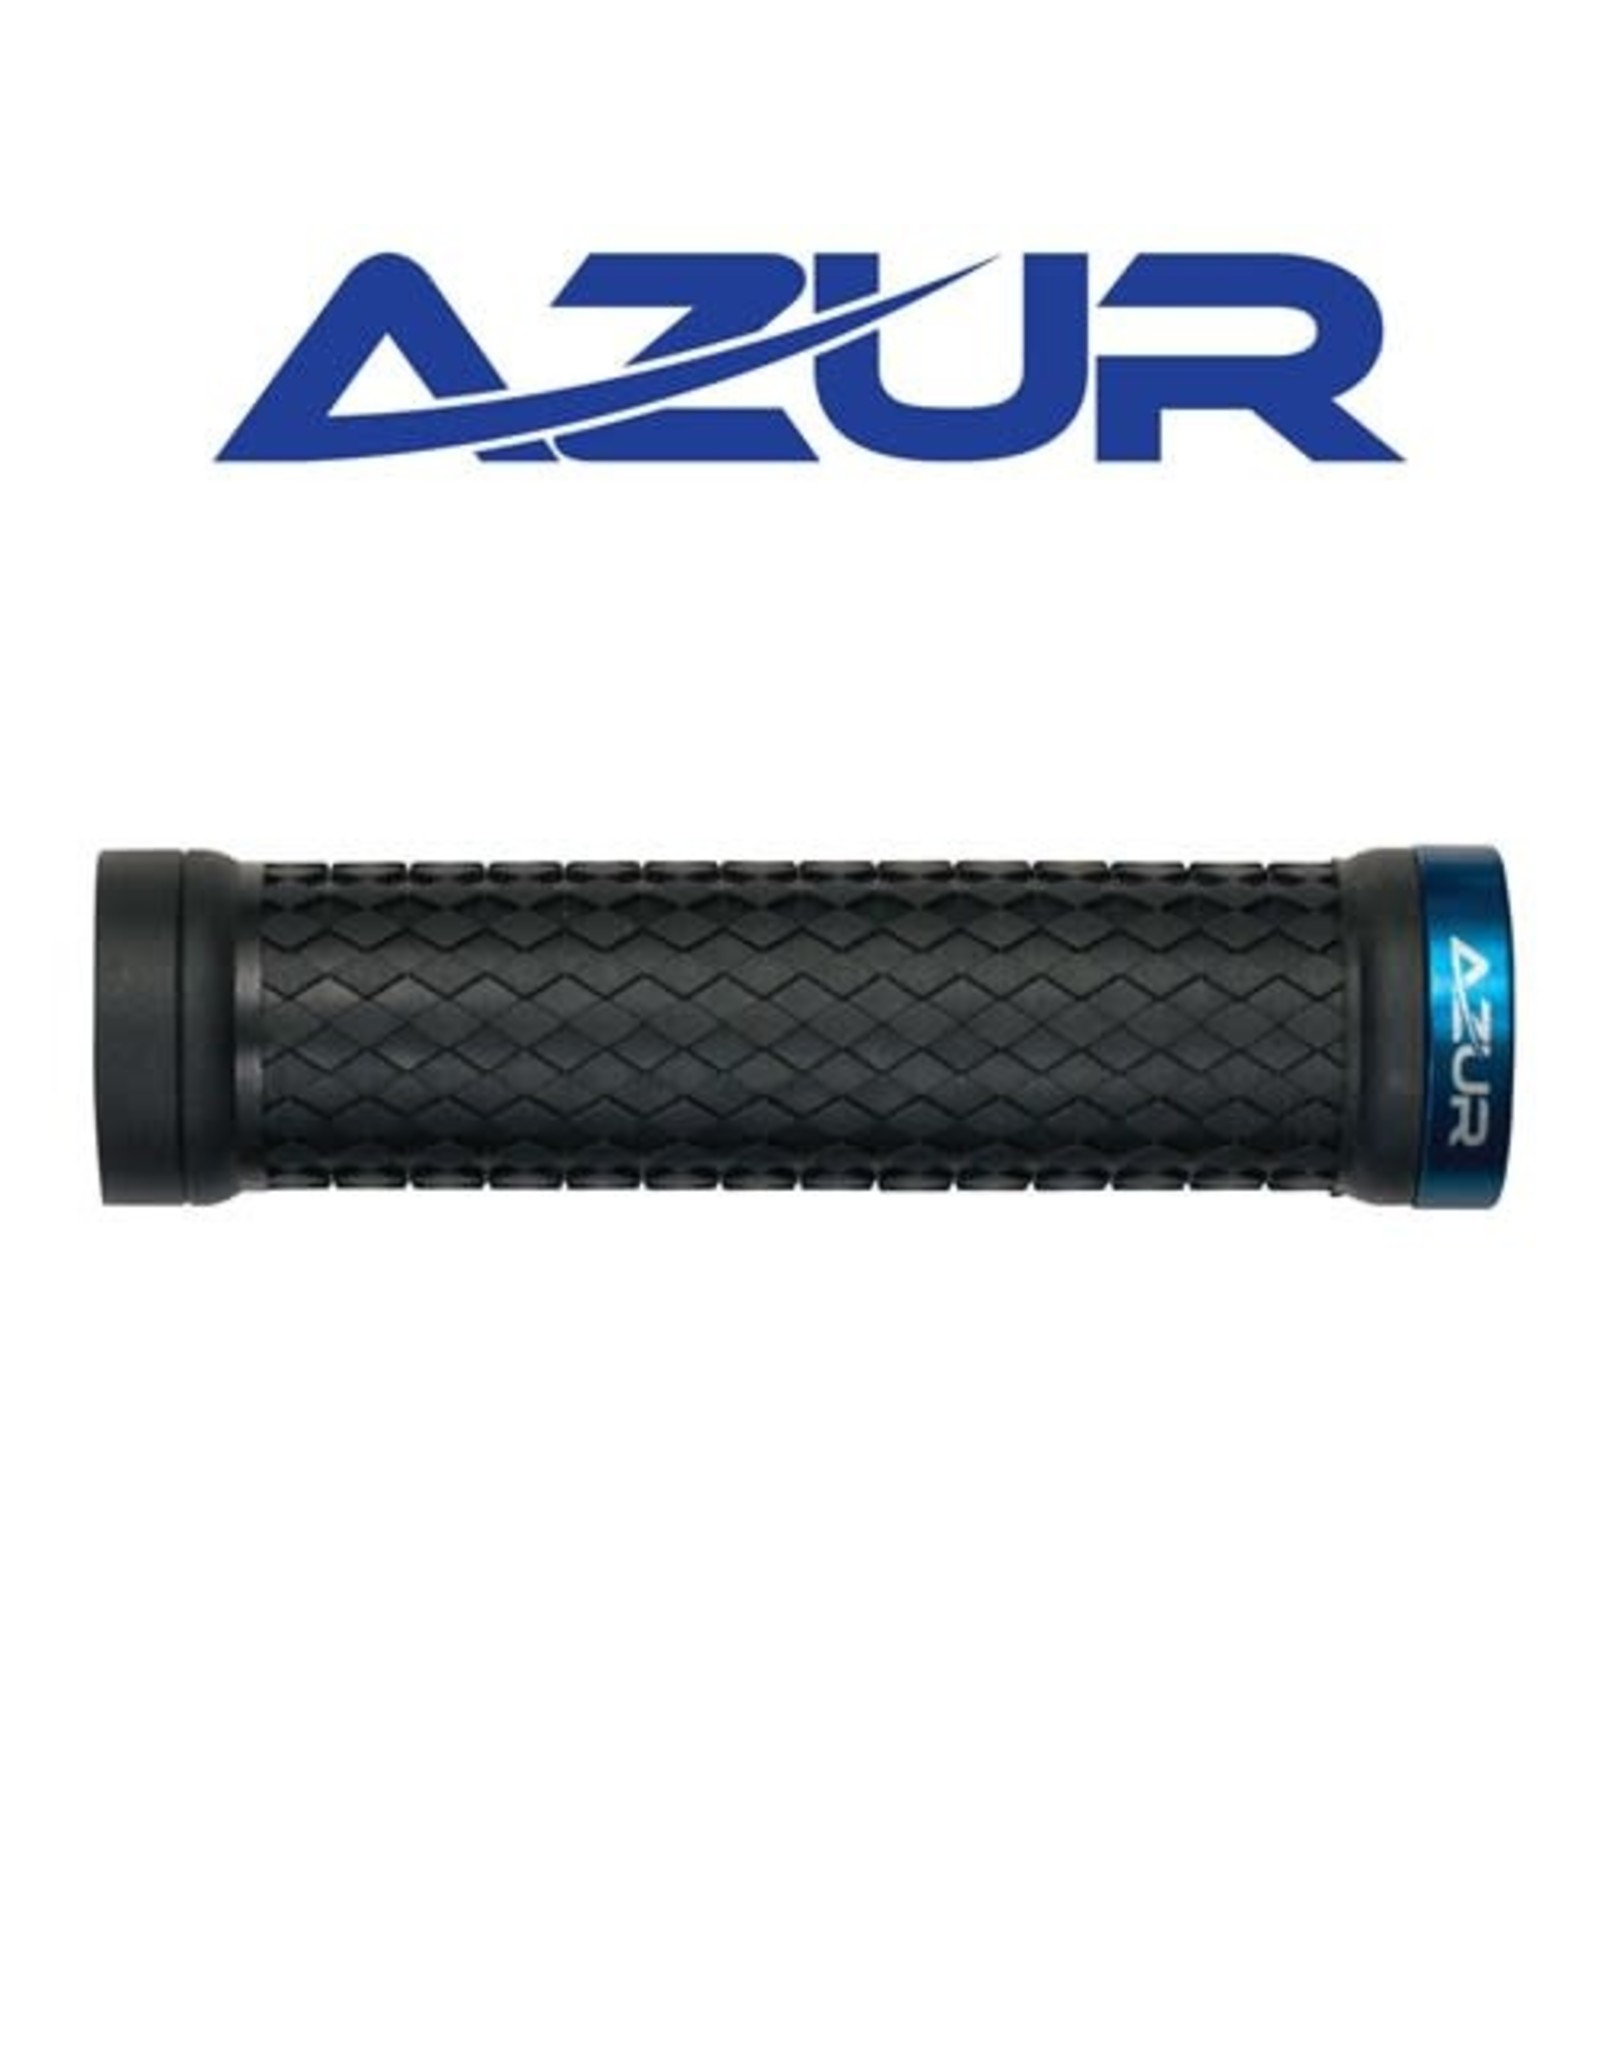 AZUR AZUR ATOM LOCK-ON GRIPS BLUE